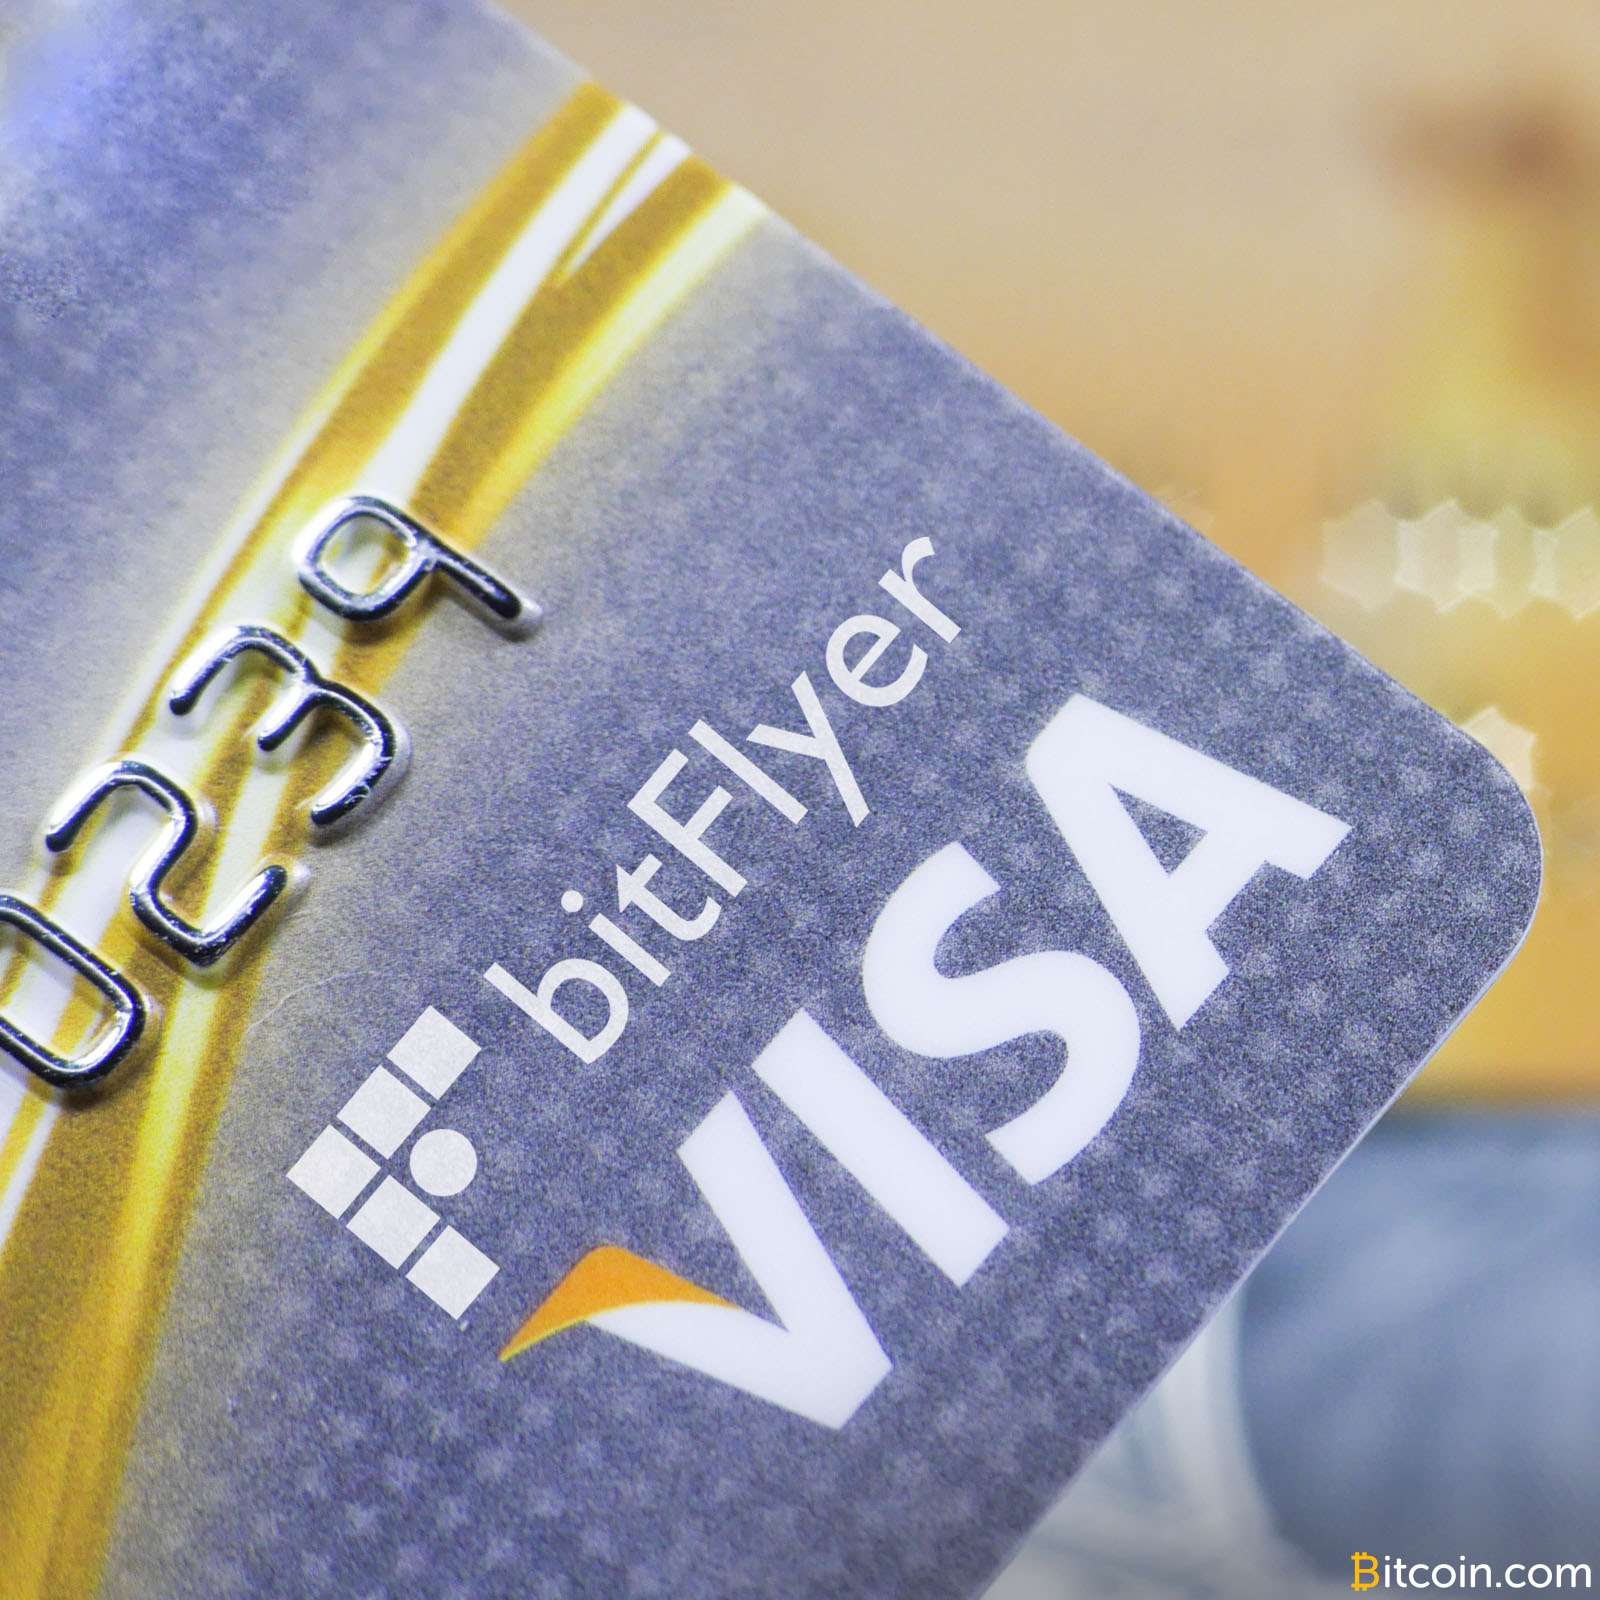 Japan's Largest Bitcoin Exchange Bitflyer Launches Bitcoin Visa Prepaid Card